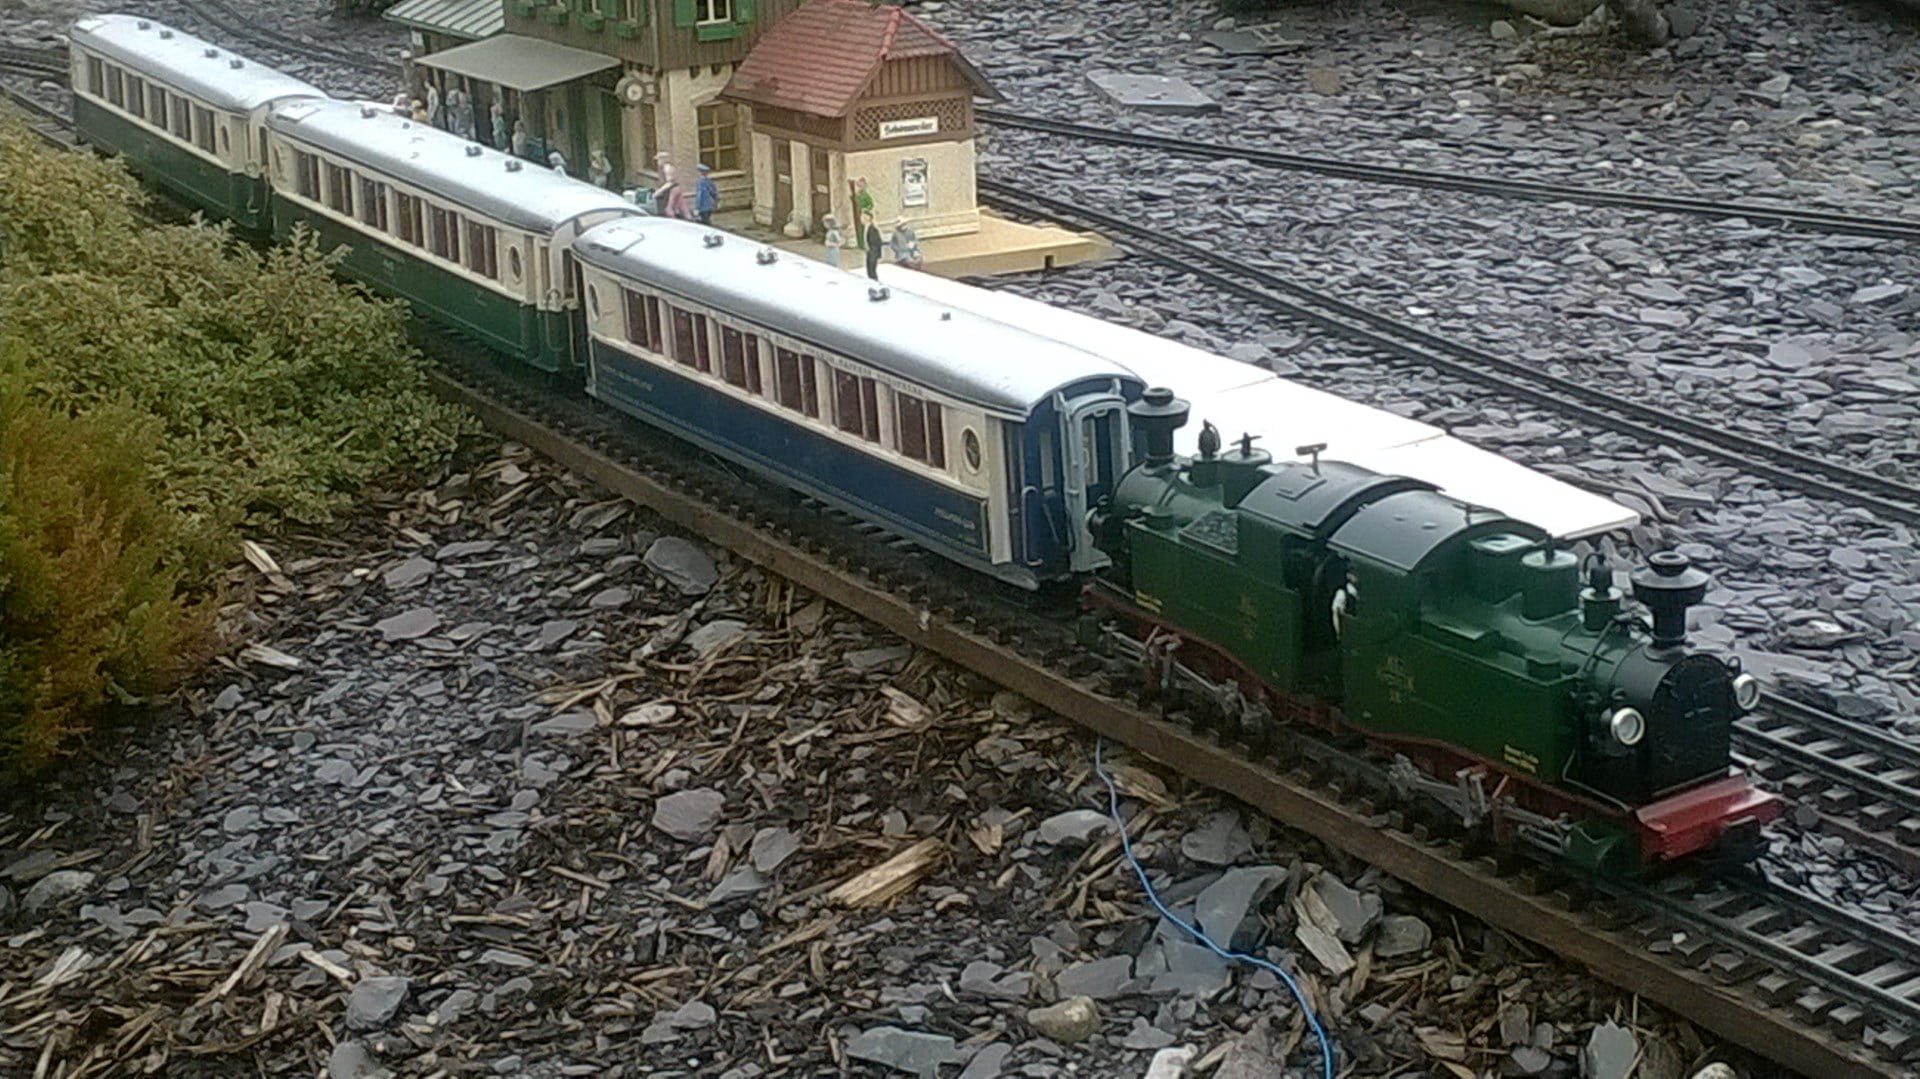 Miniature Railway at Gypsy Wood Park